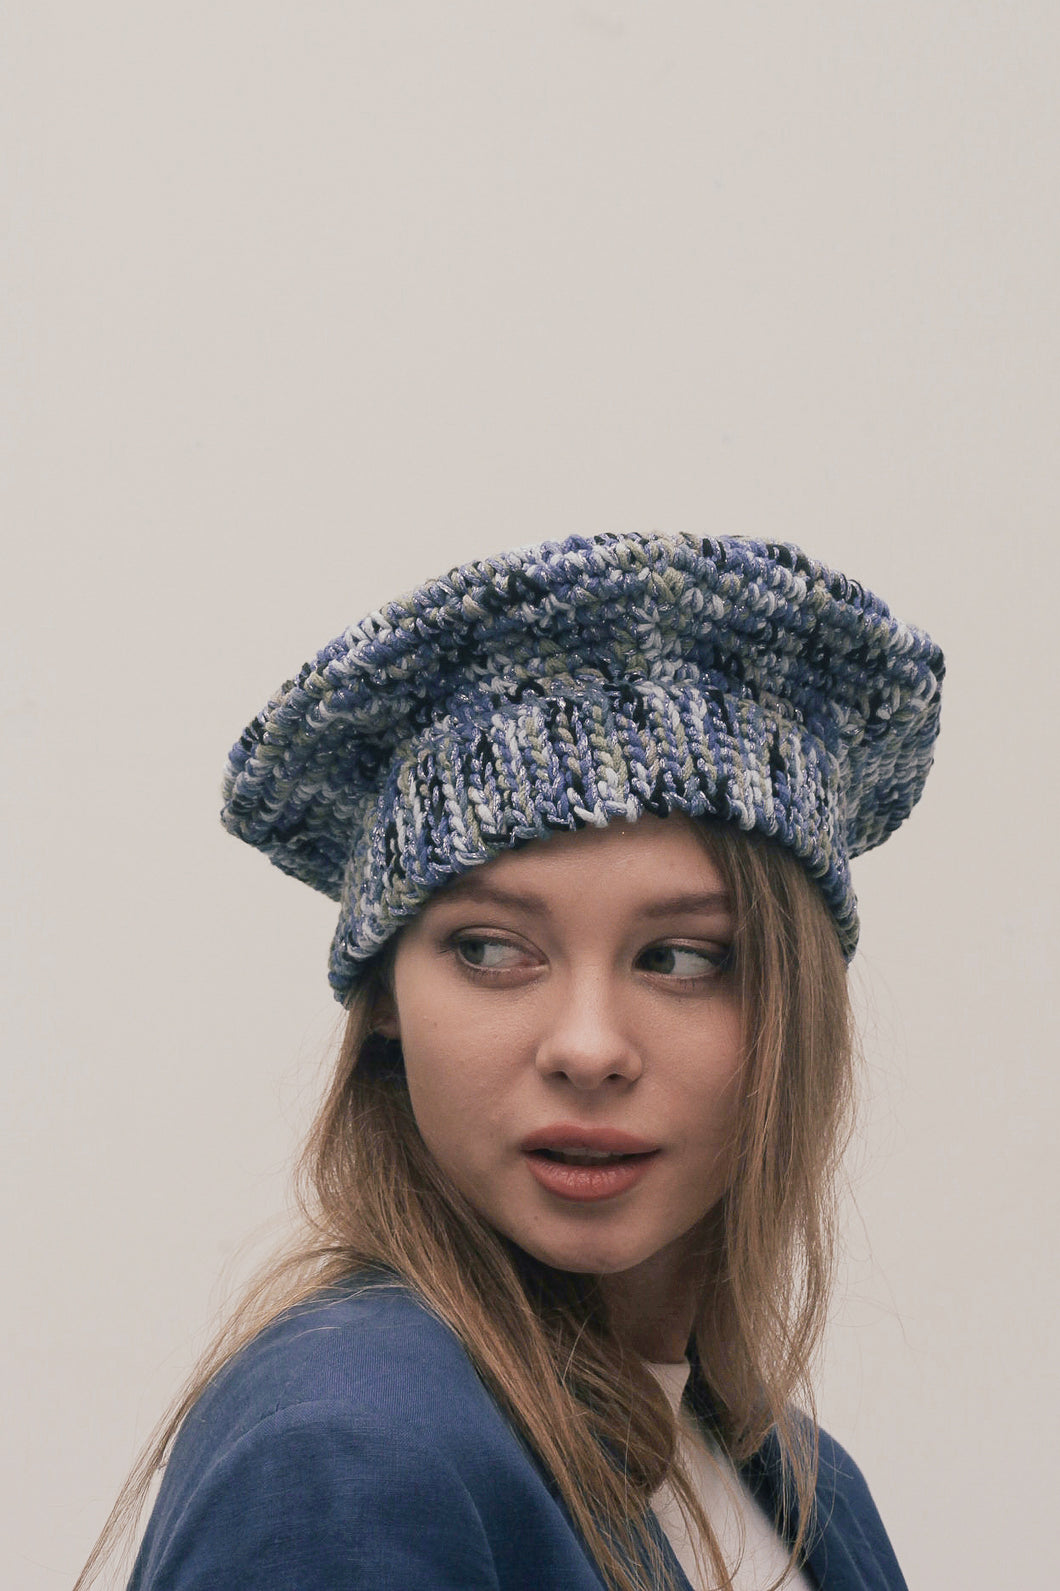 Nón beret len đan thủ công Amelia